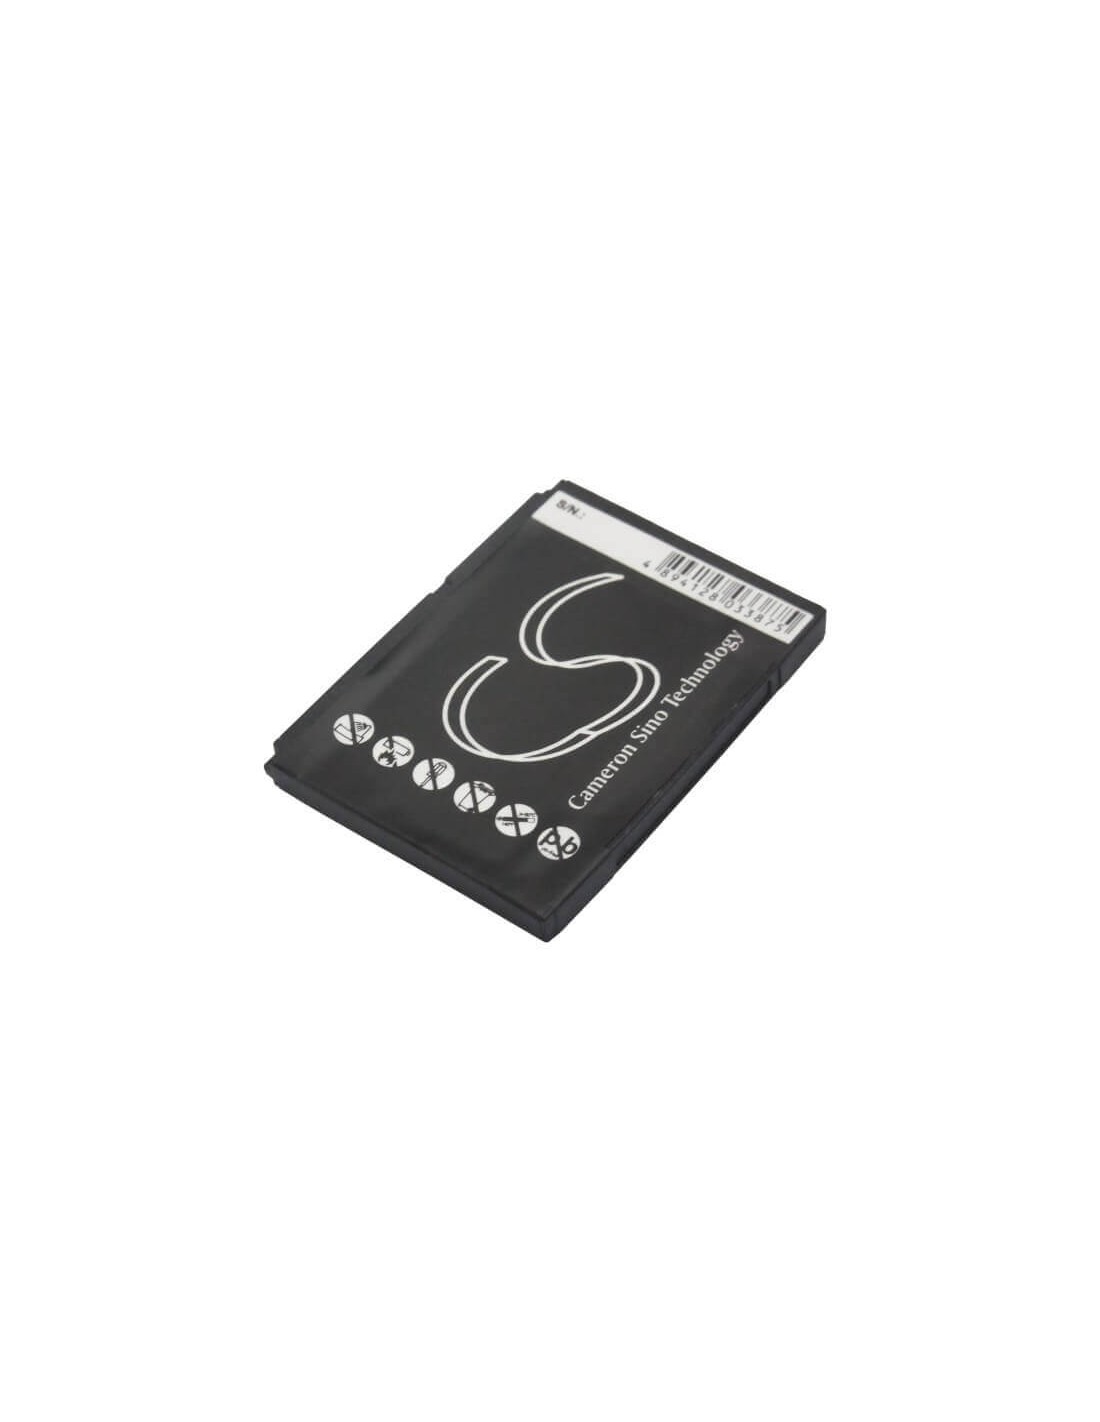 Battery for Audiovox PCD TXT8030, PCD TXT8030 Razzle 3.7V, 800mAh - 2.96Wh